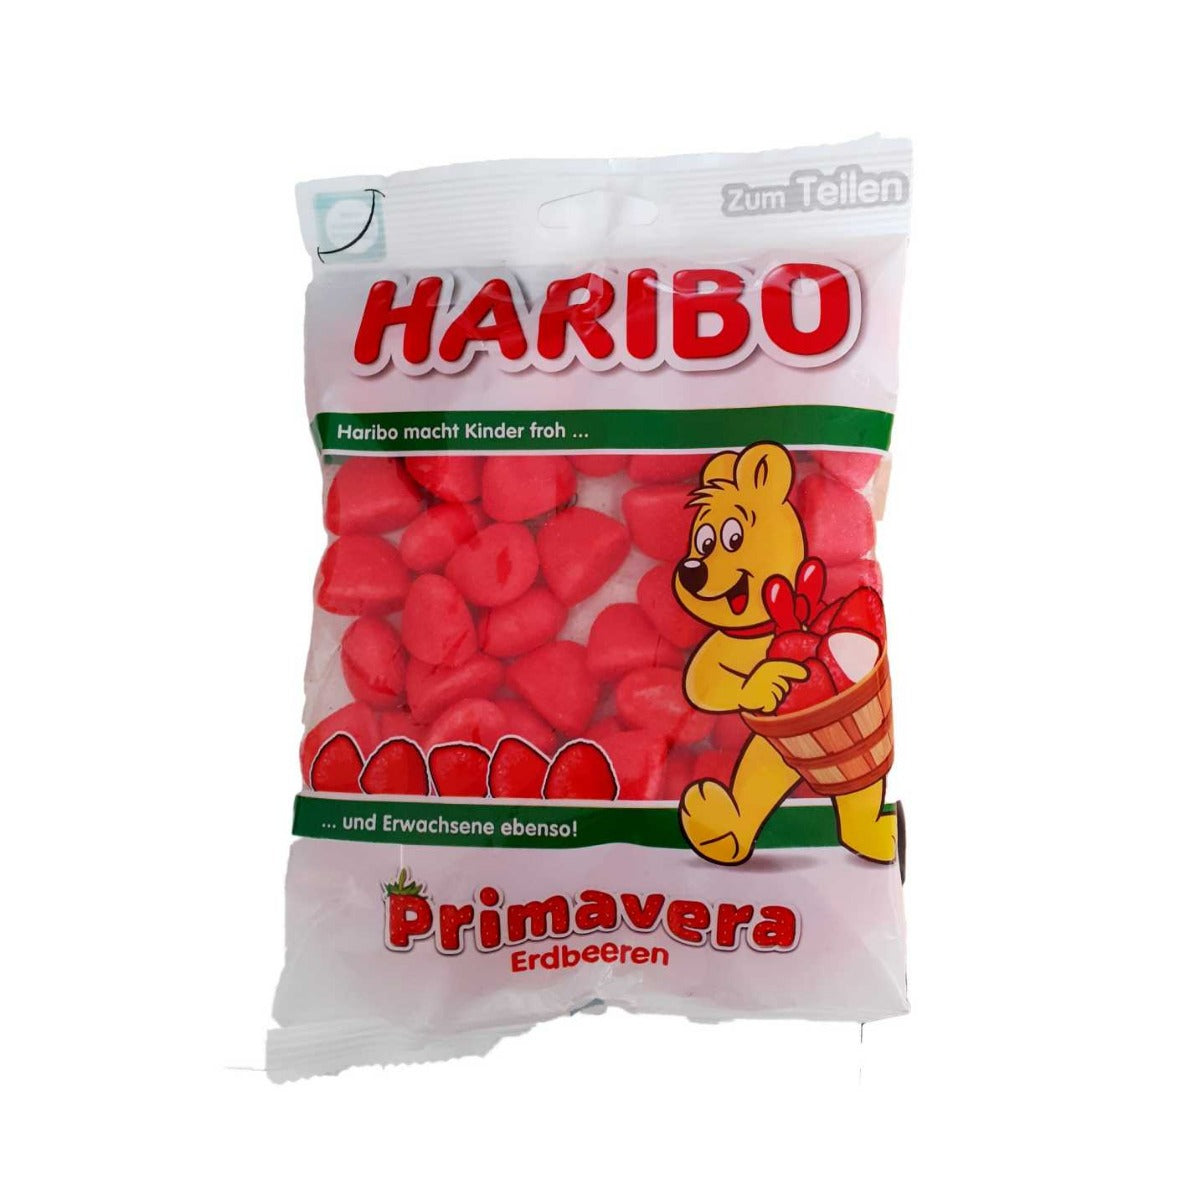 Haribo Primavera - הריבו תות - טעימים